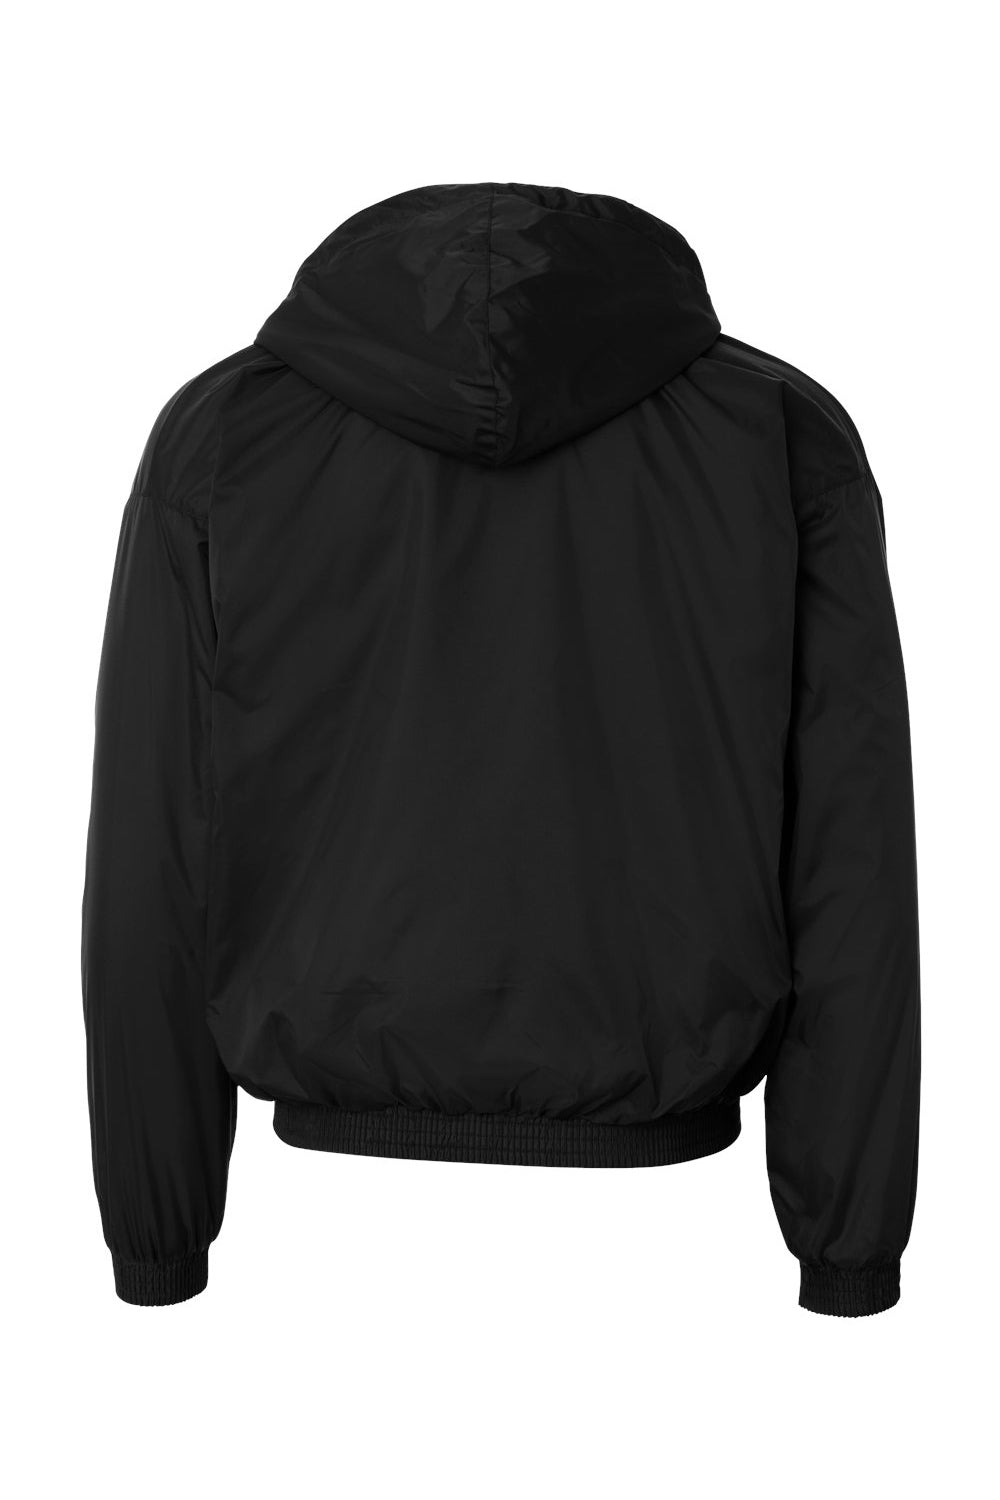 Augusta Sportswear 3280 Mens Water Resistant Full Zip Hooded Jacket Black Flat Back